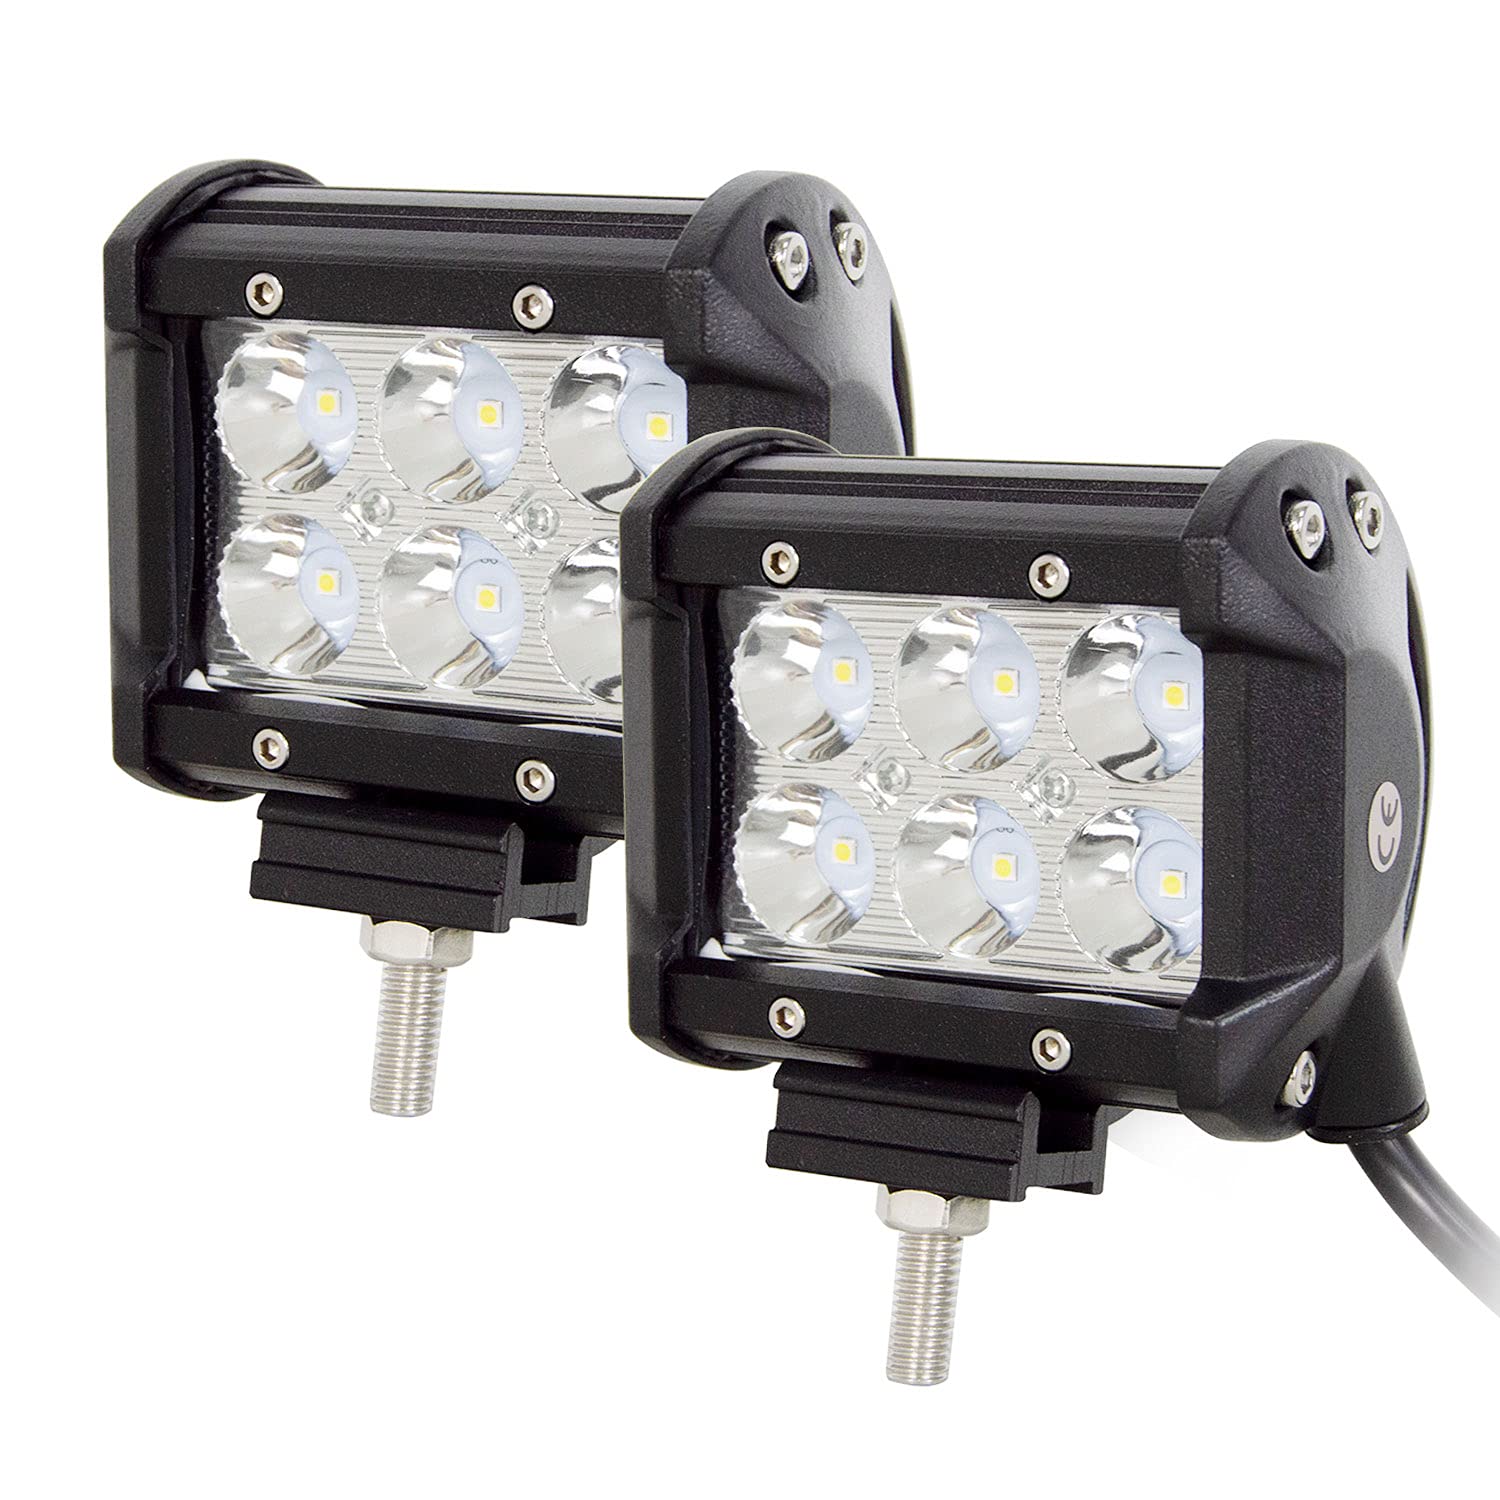 AUXTINGS 4 inch 18W Spot LED Work Light Bar Driving Lamp 1440LM 6000K,2 Piece von AUXTINGS